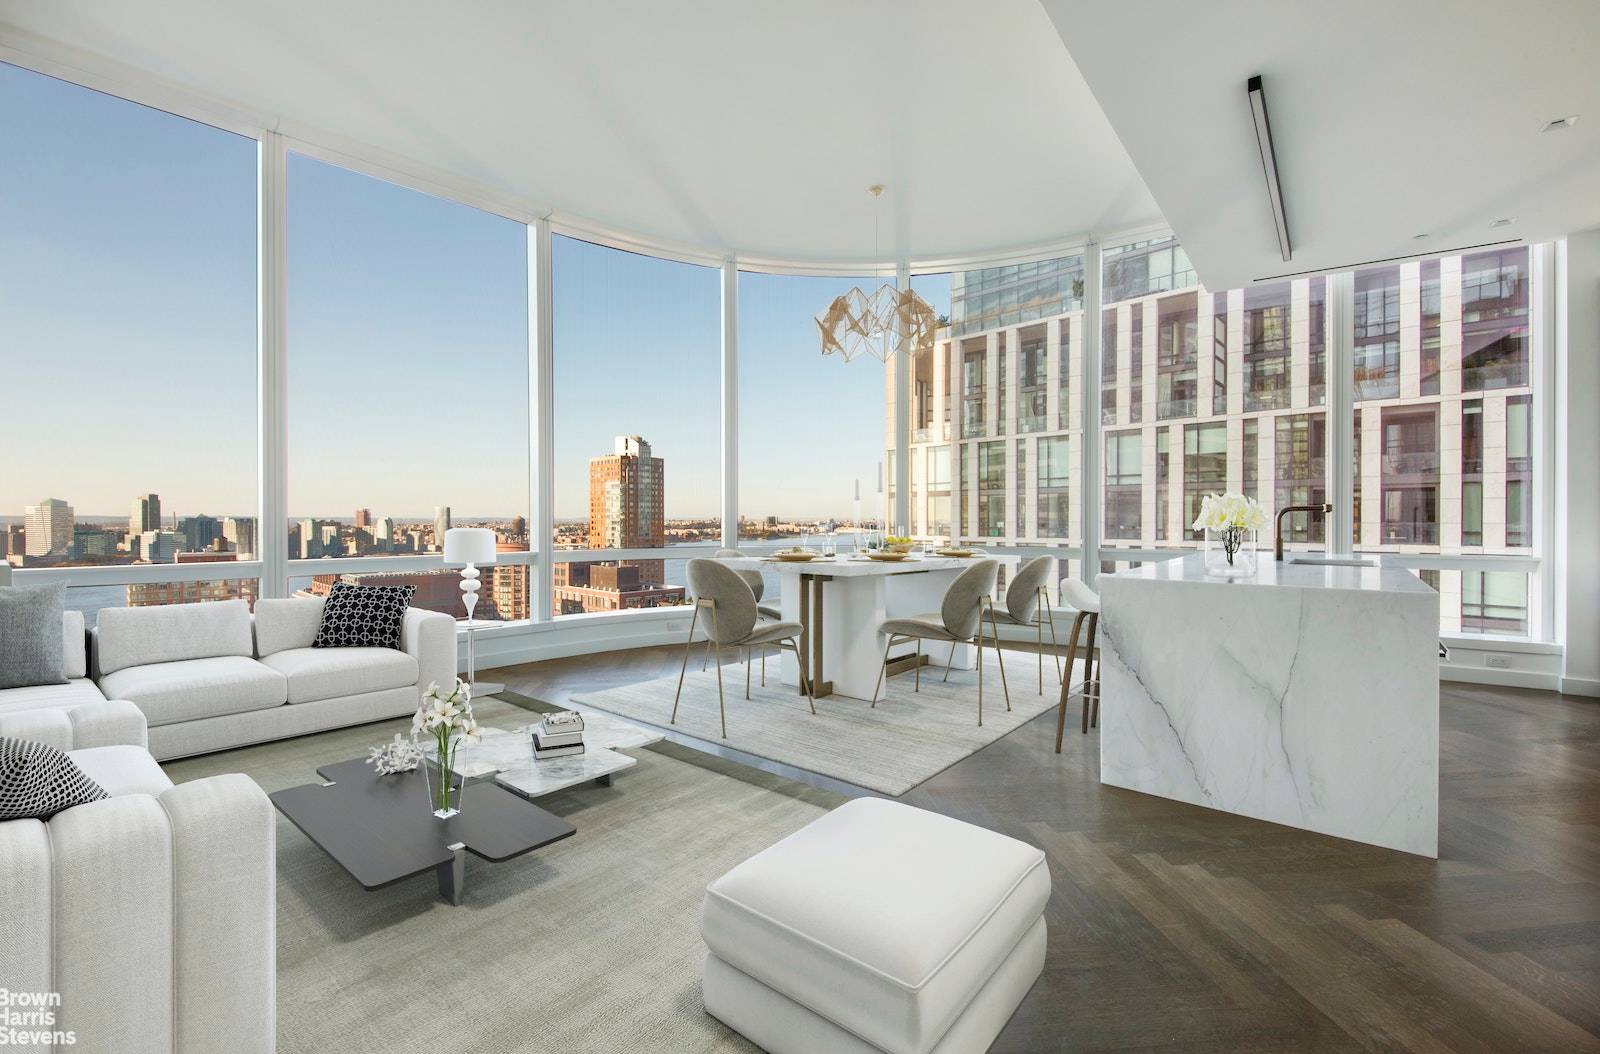 Sleek sophistication awaits you at Tribeca's newest luxury condominium 111 Murray St.